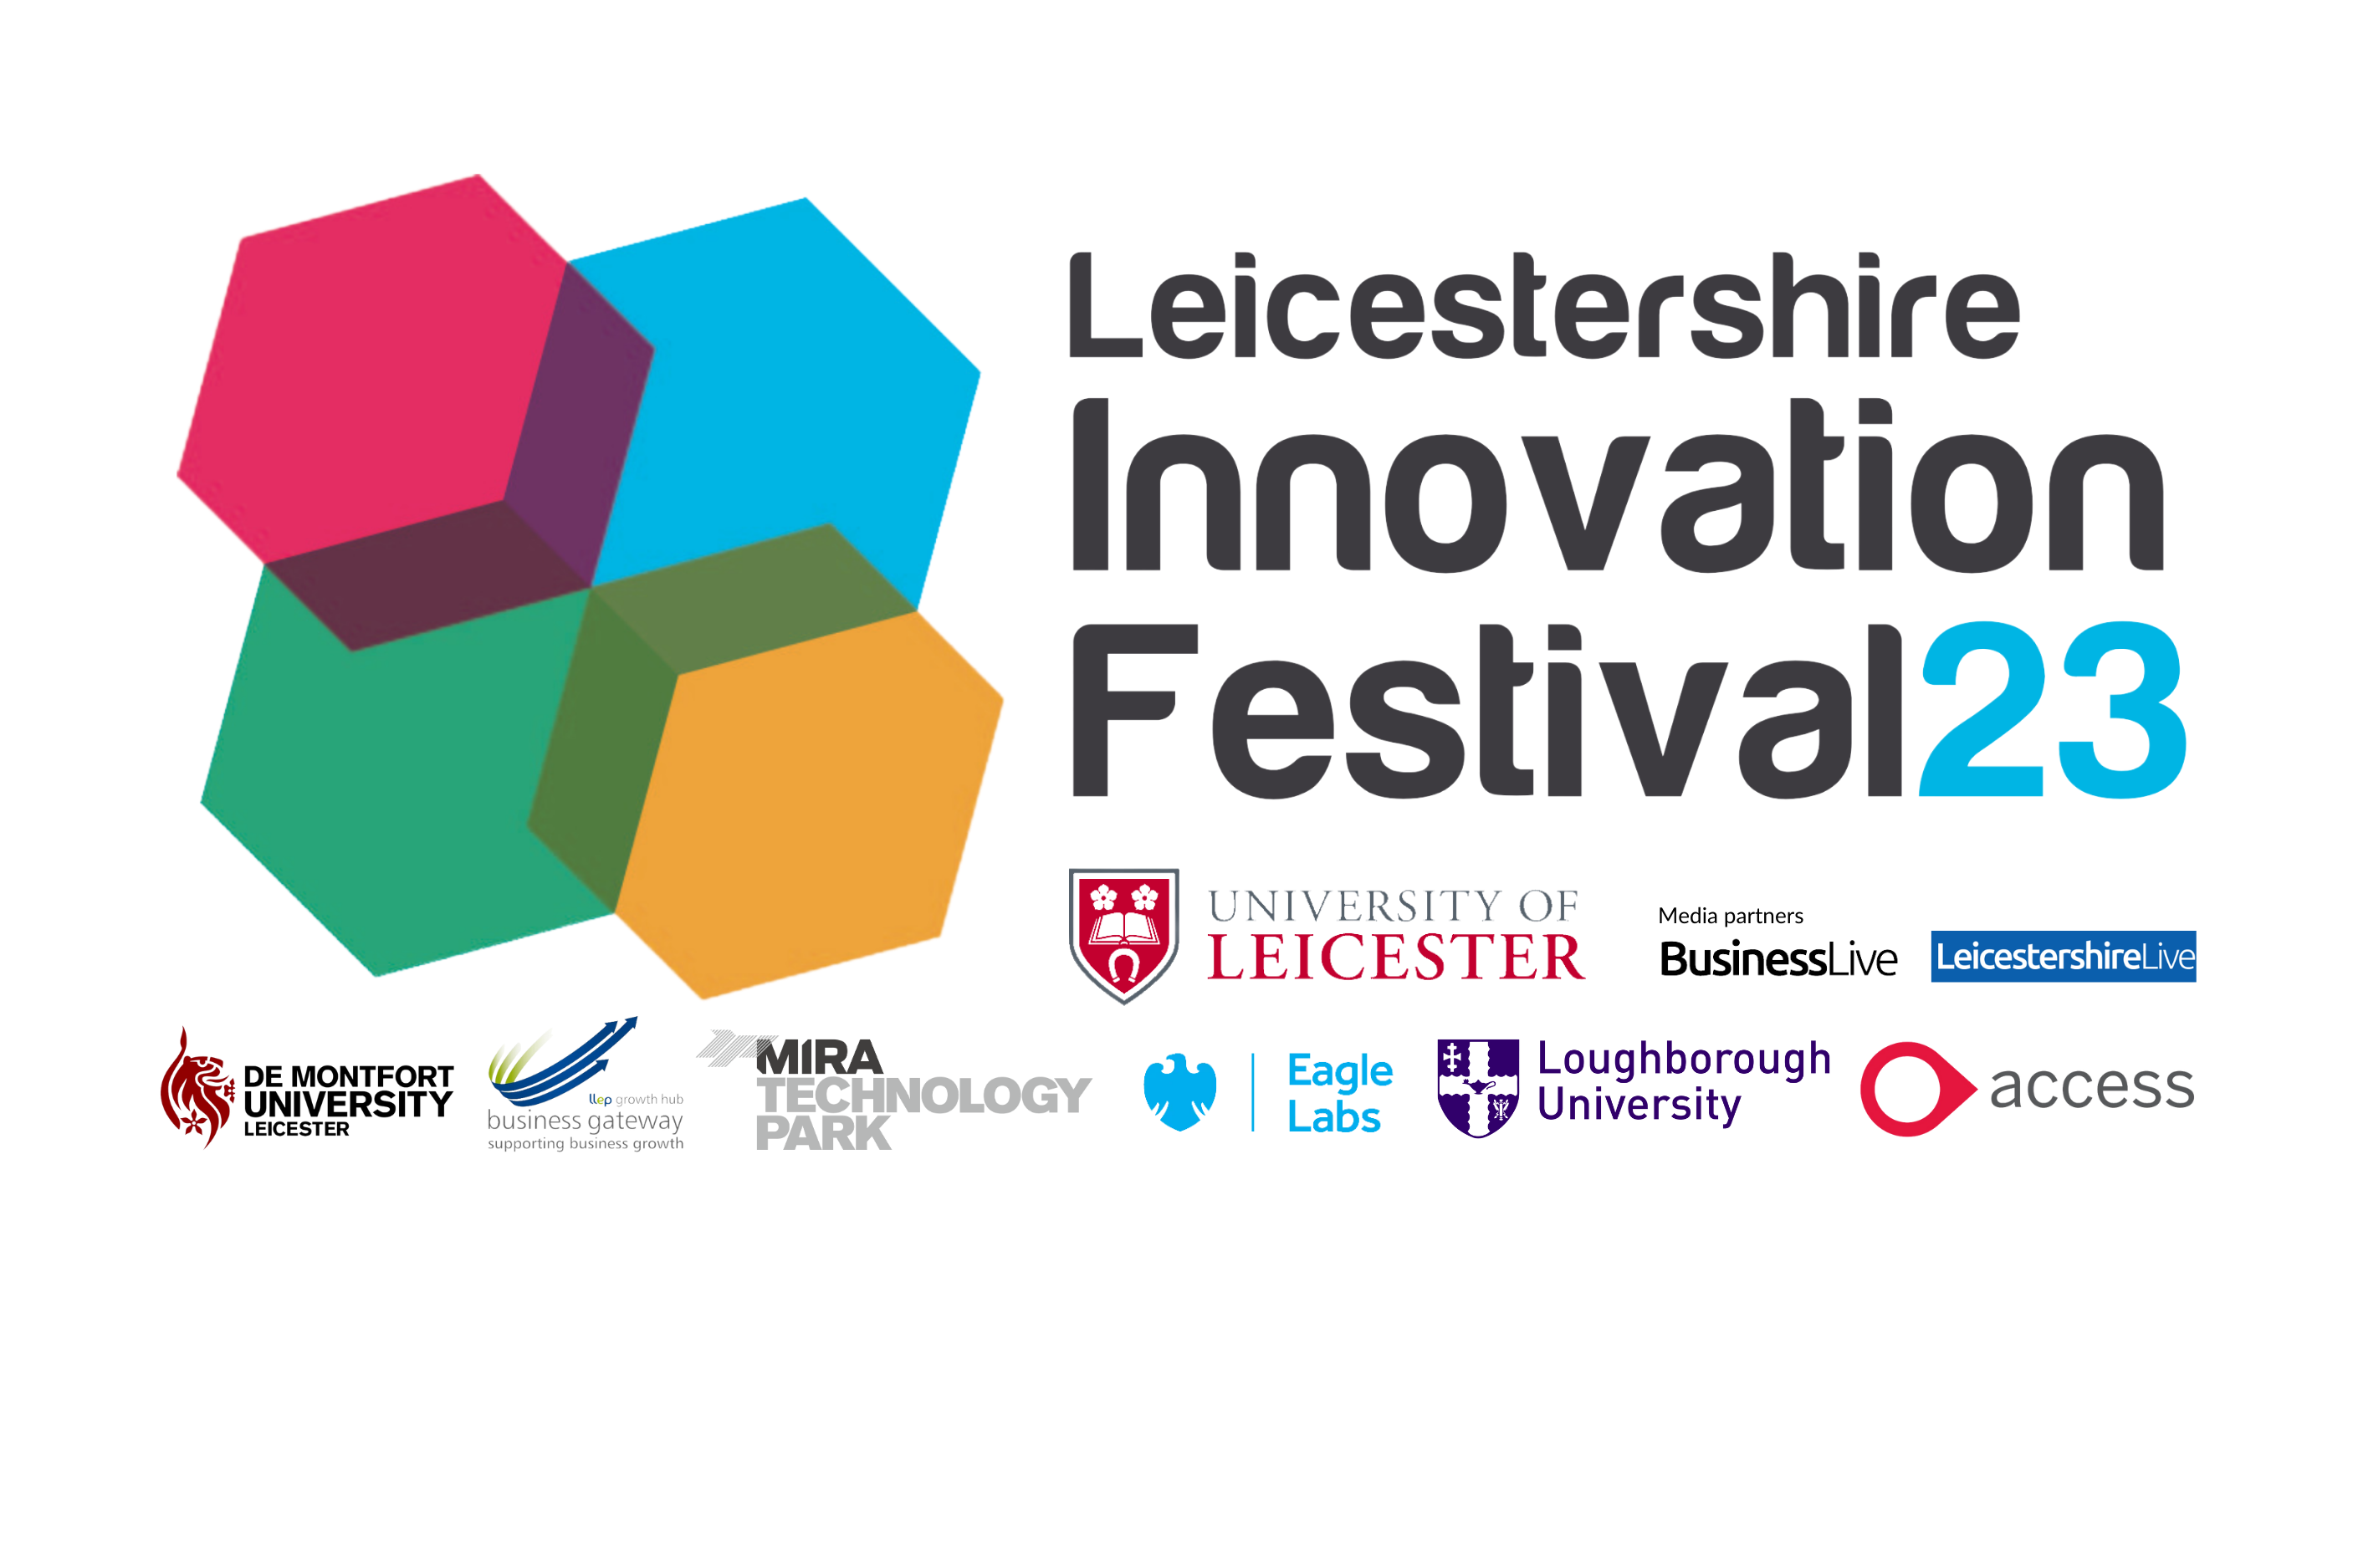 Innovation festival large logo with smaller logos